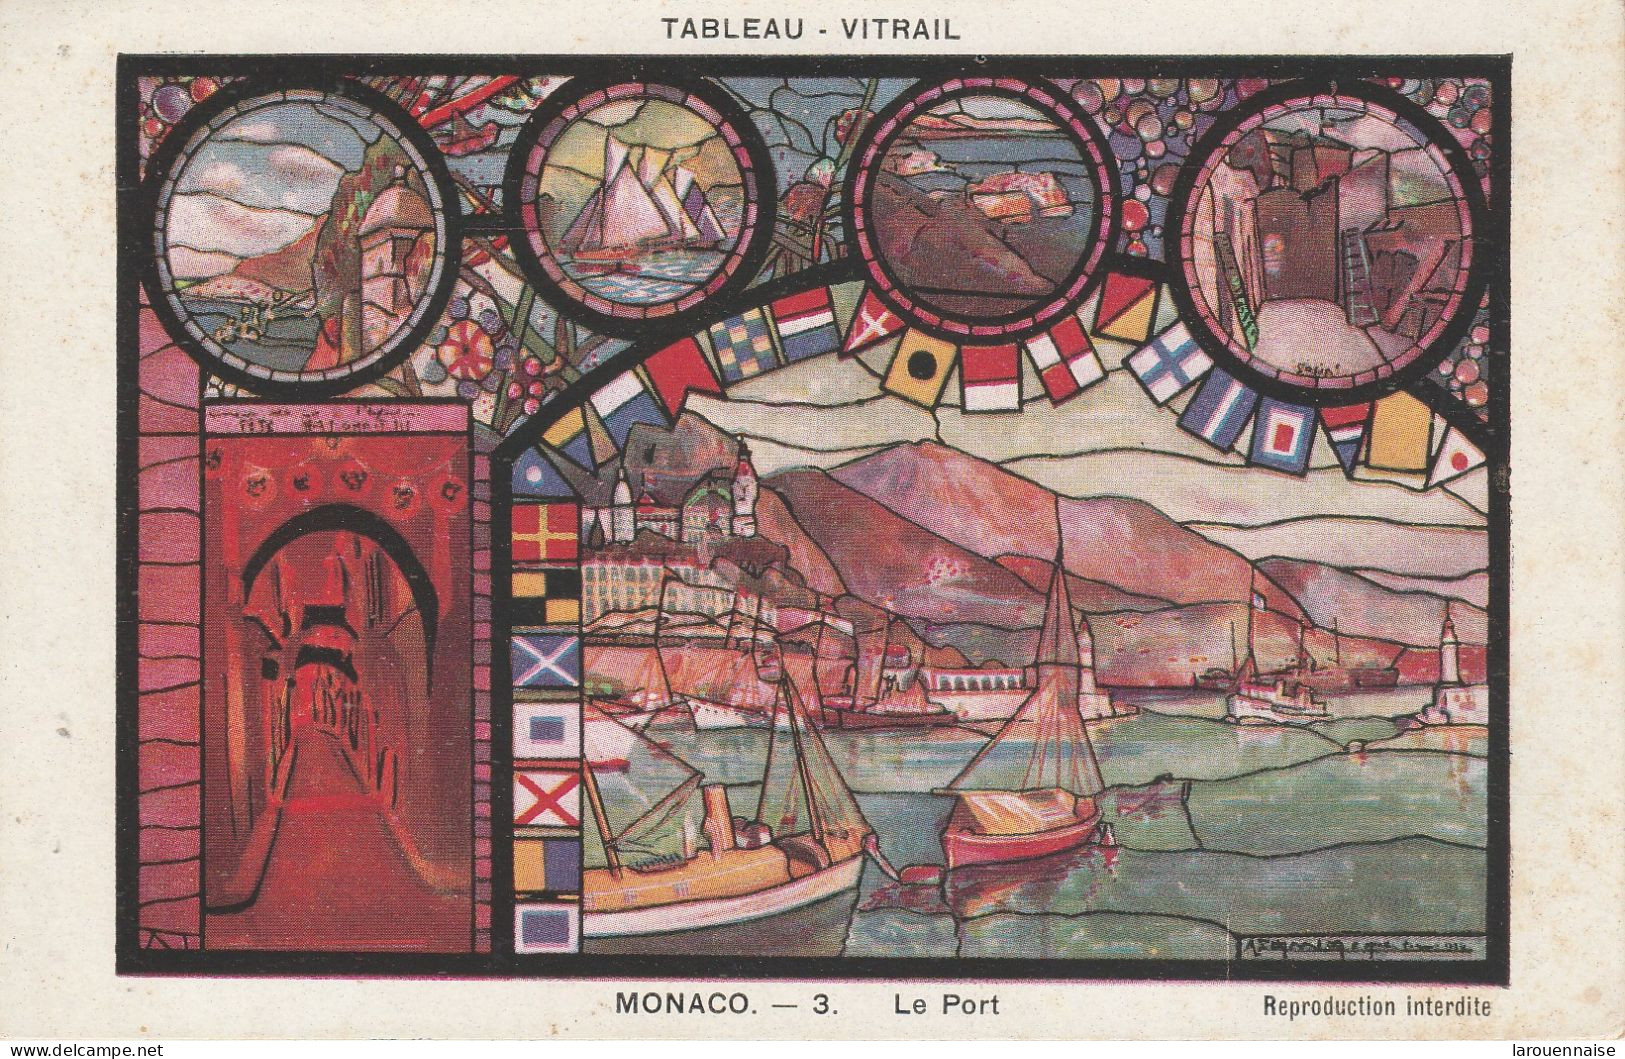 MONACO - Tableau Vitrail - Le Port - Port